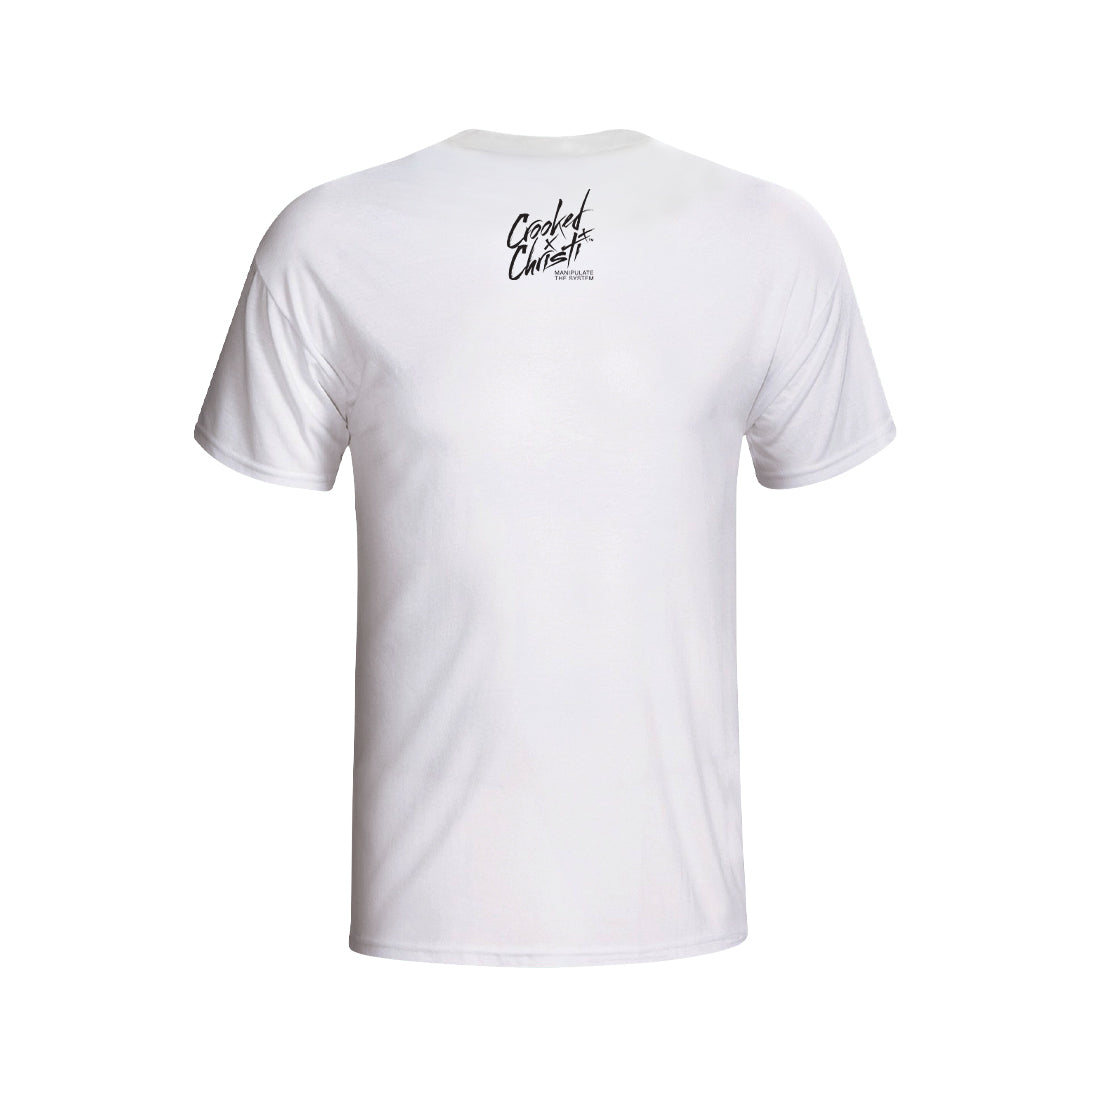 Seagull T Shirt White